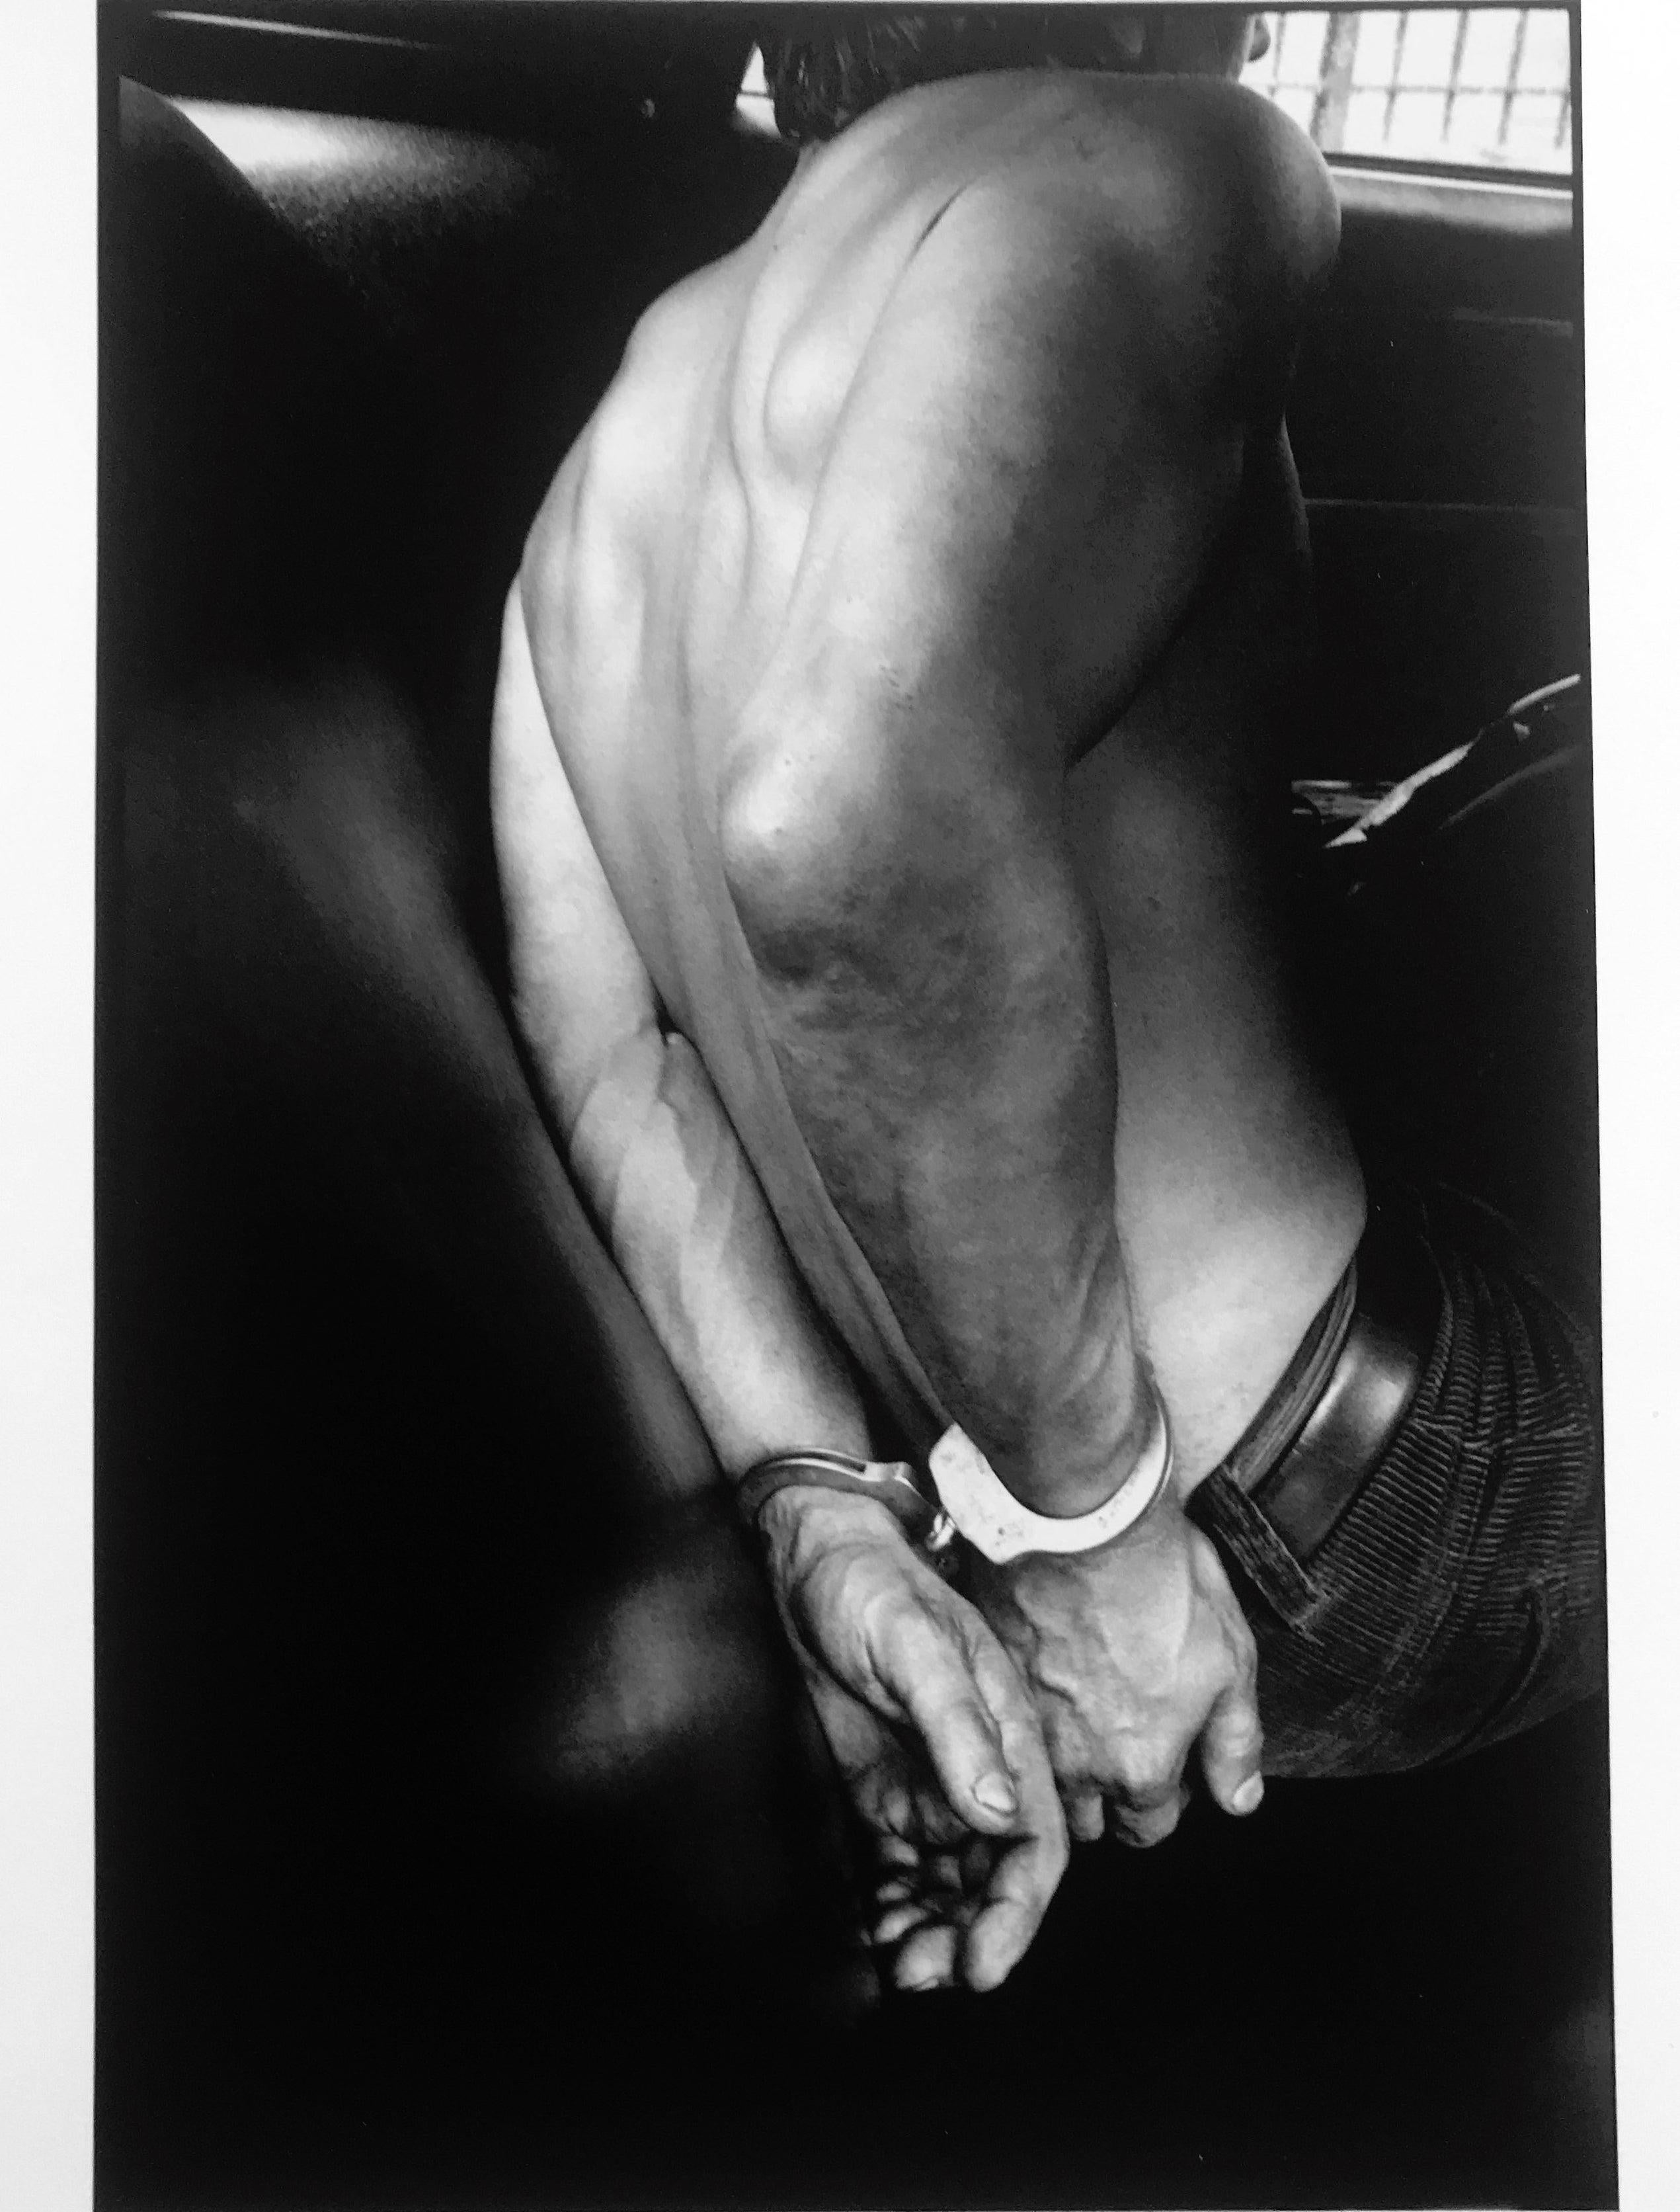 Leonard Freed Figurative Photograph - Handcuffed, New York City, Black and White Documentary Photography 1970s